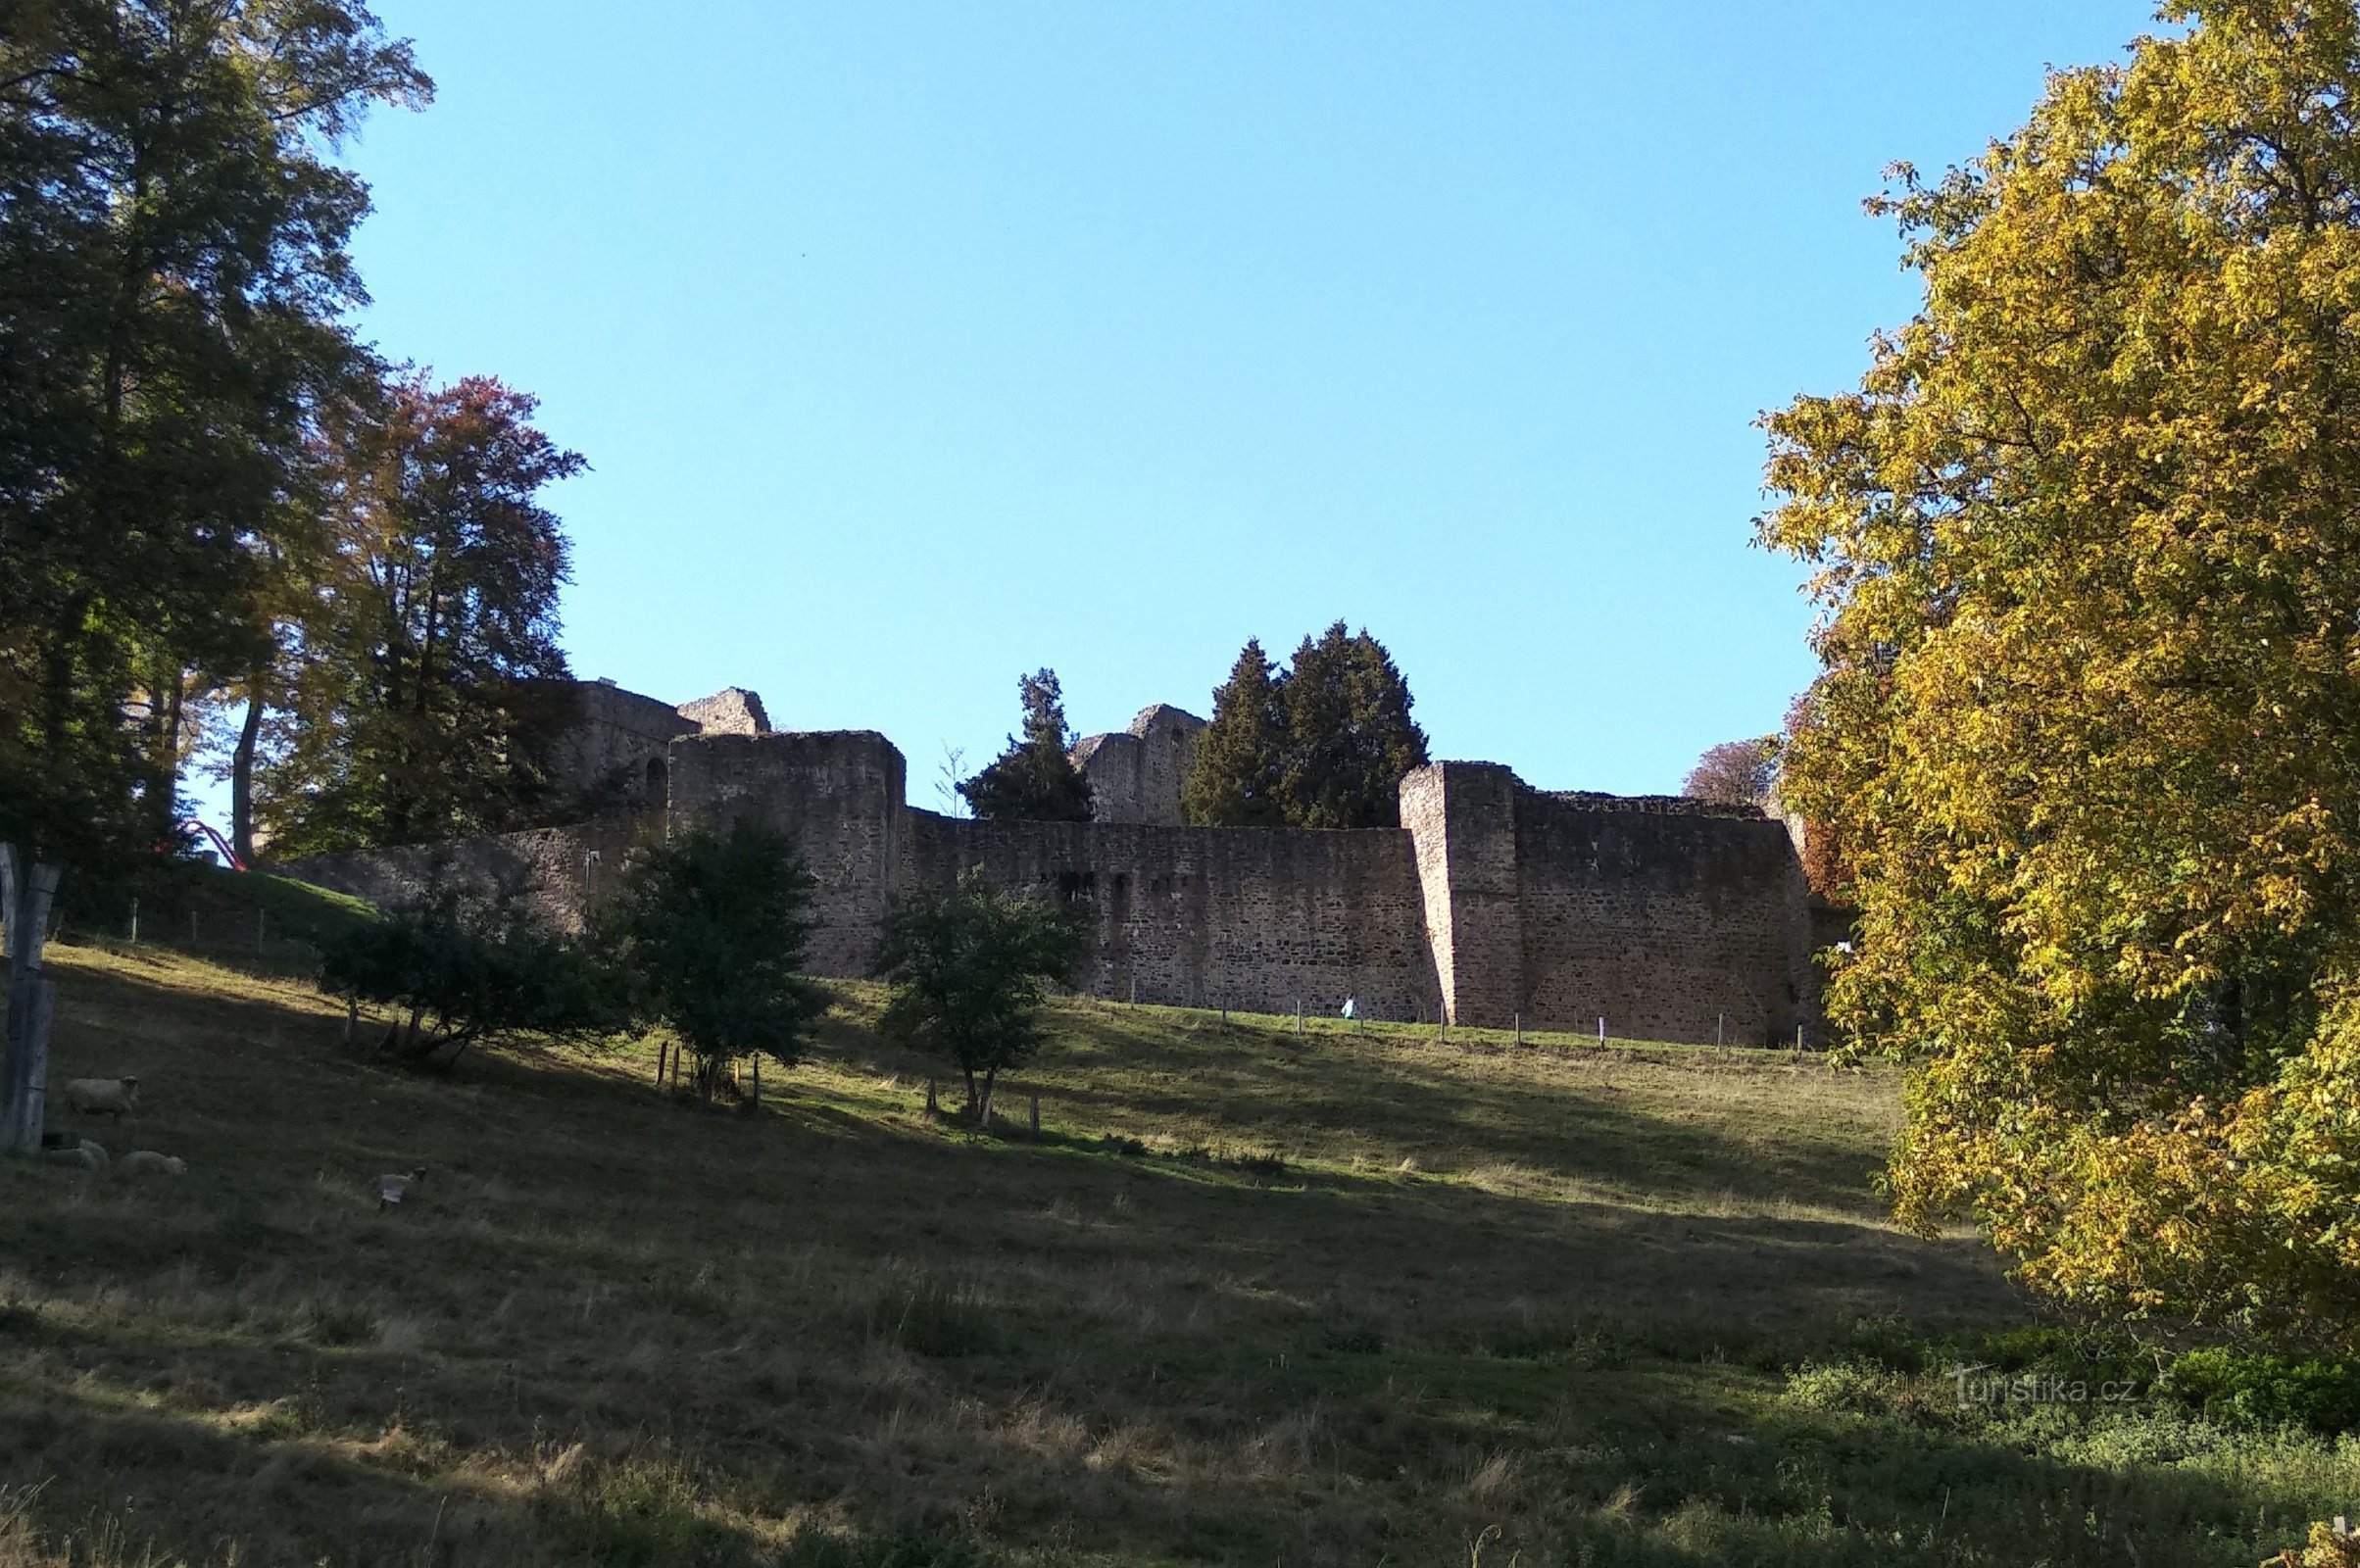 väggarna i slottet Klenová